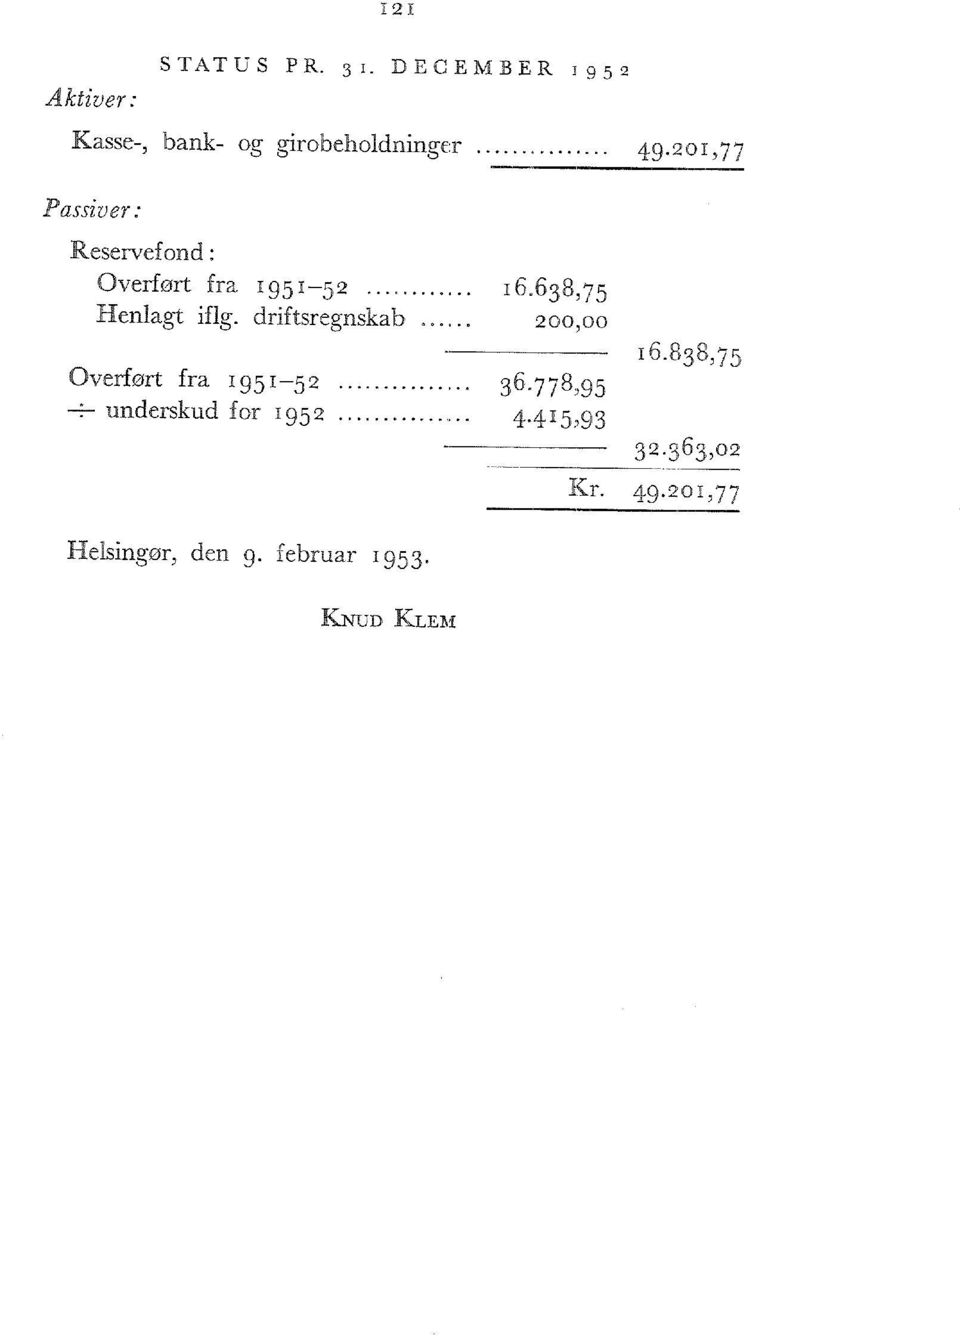 201,77 Passiver: Reservefond: Overført fra 1951-52 16.638,75 Henlagt iflg.